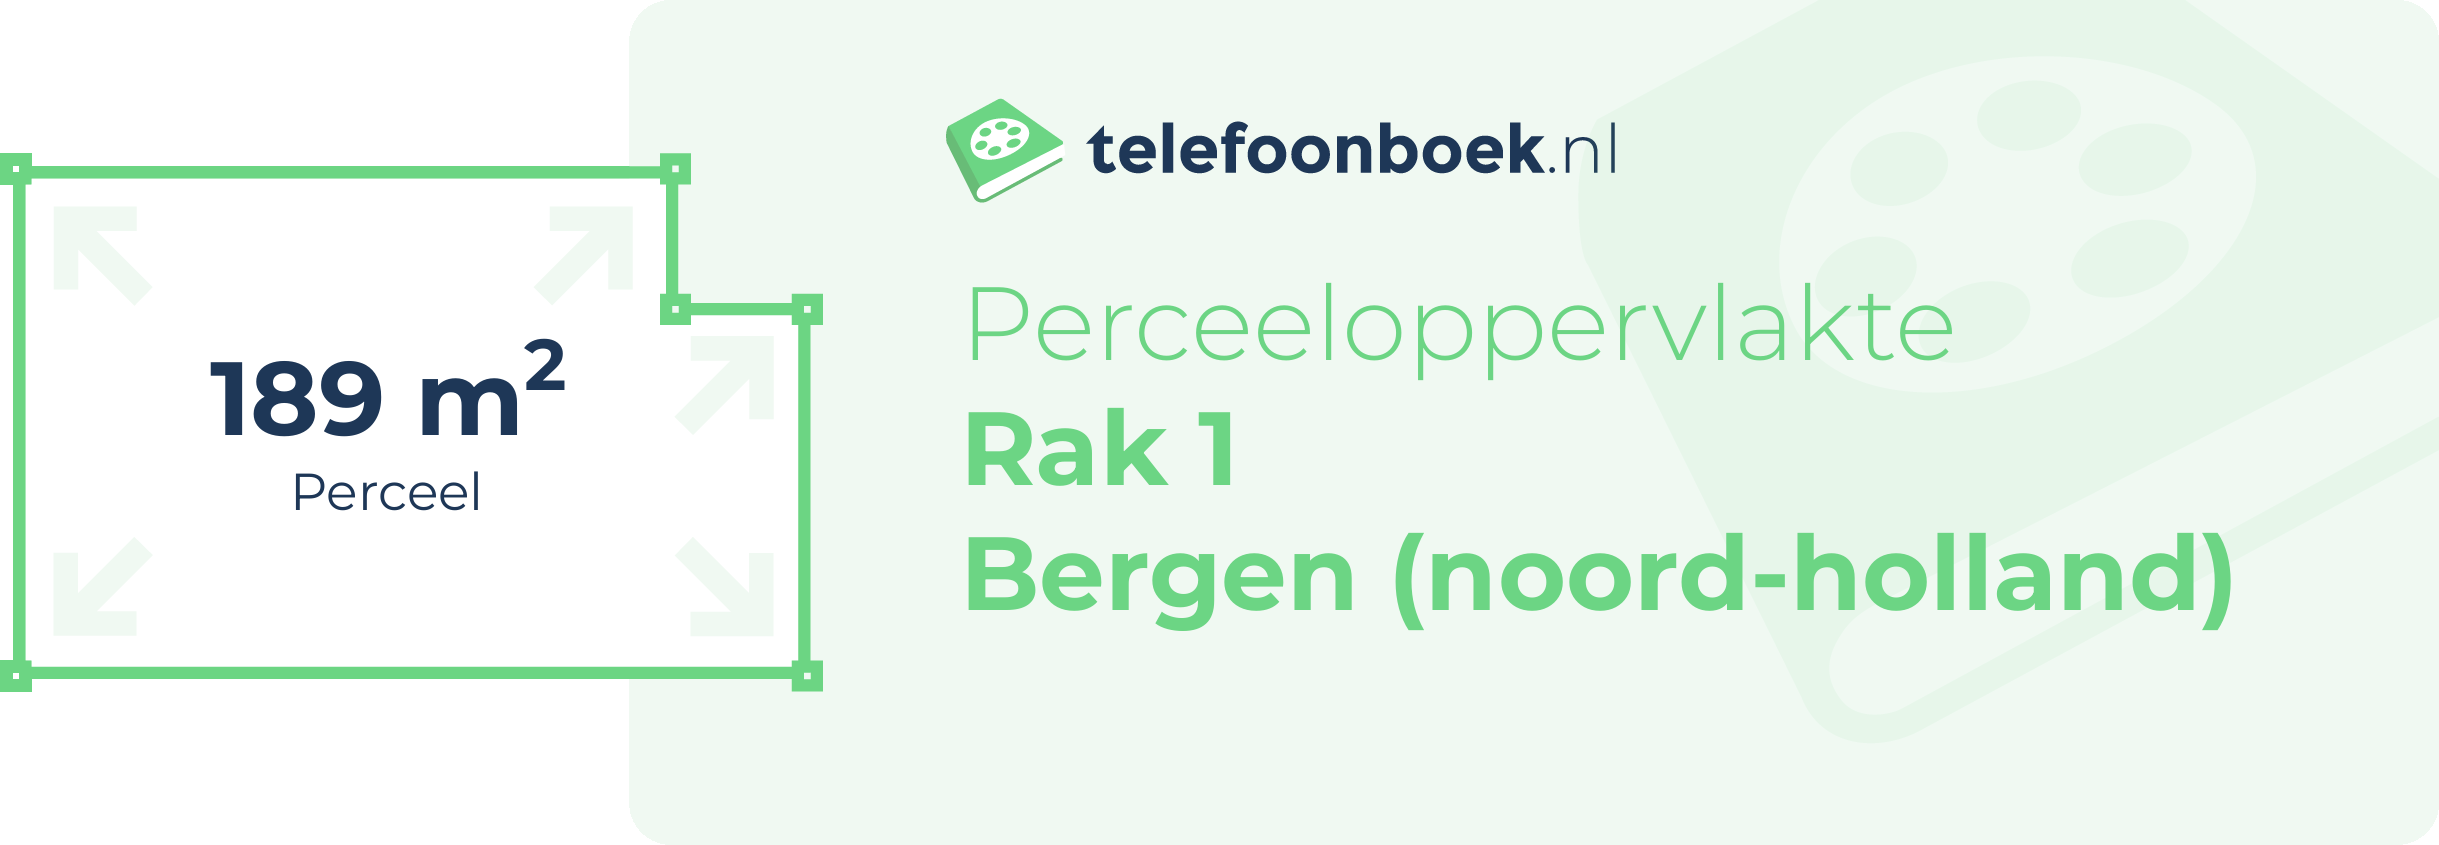 Perceeloppervlakte Rak 1 Bergen (Noord-Holland)